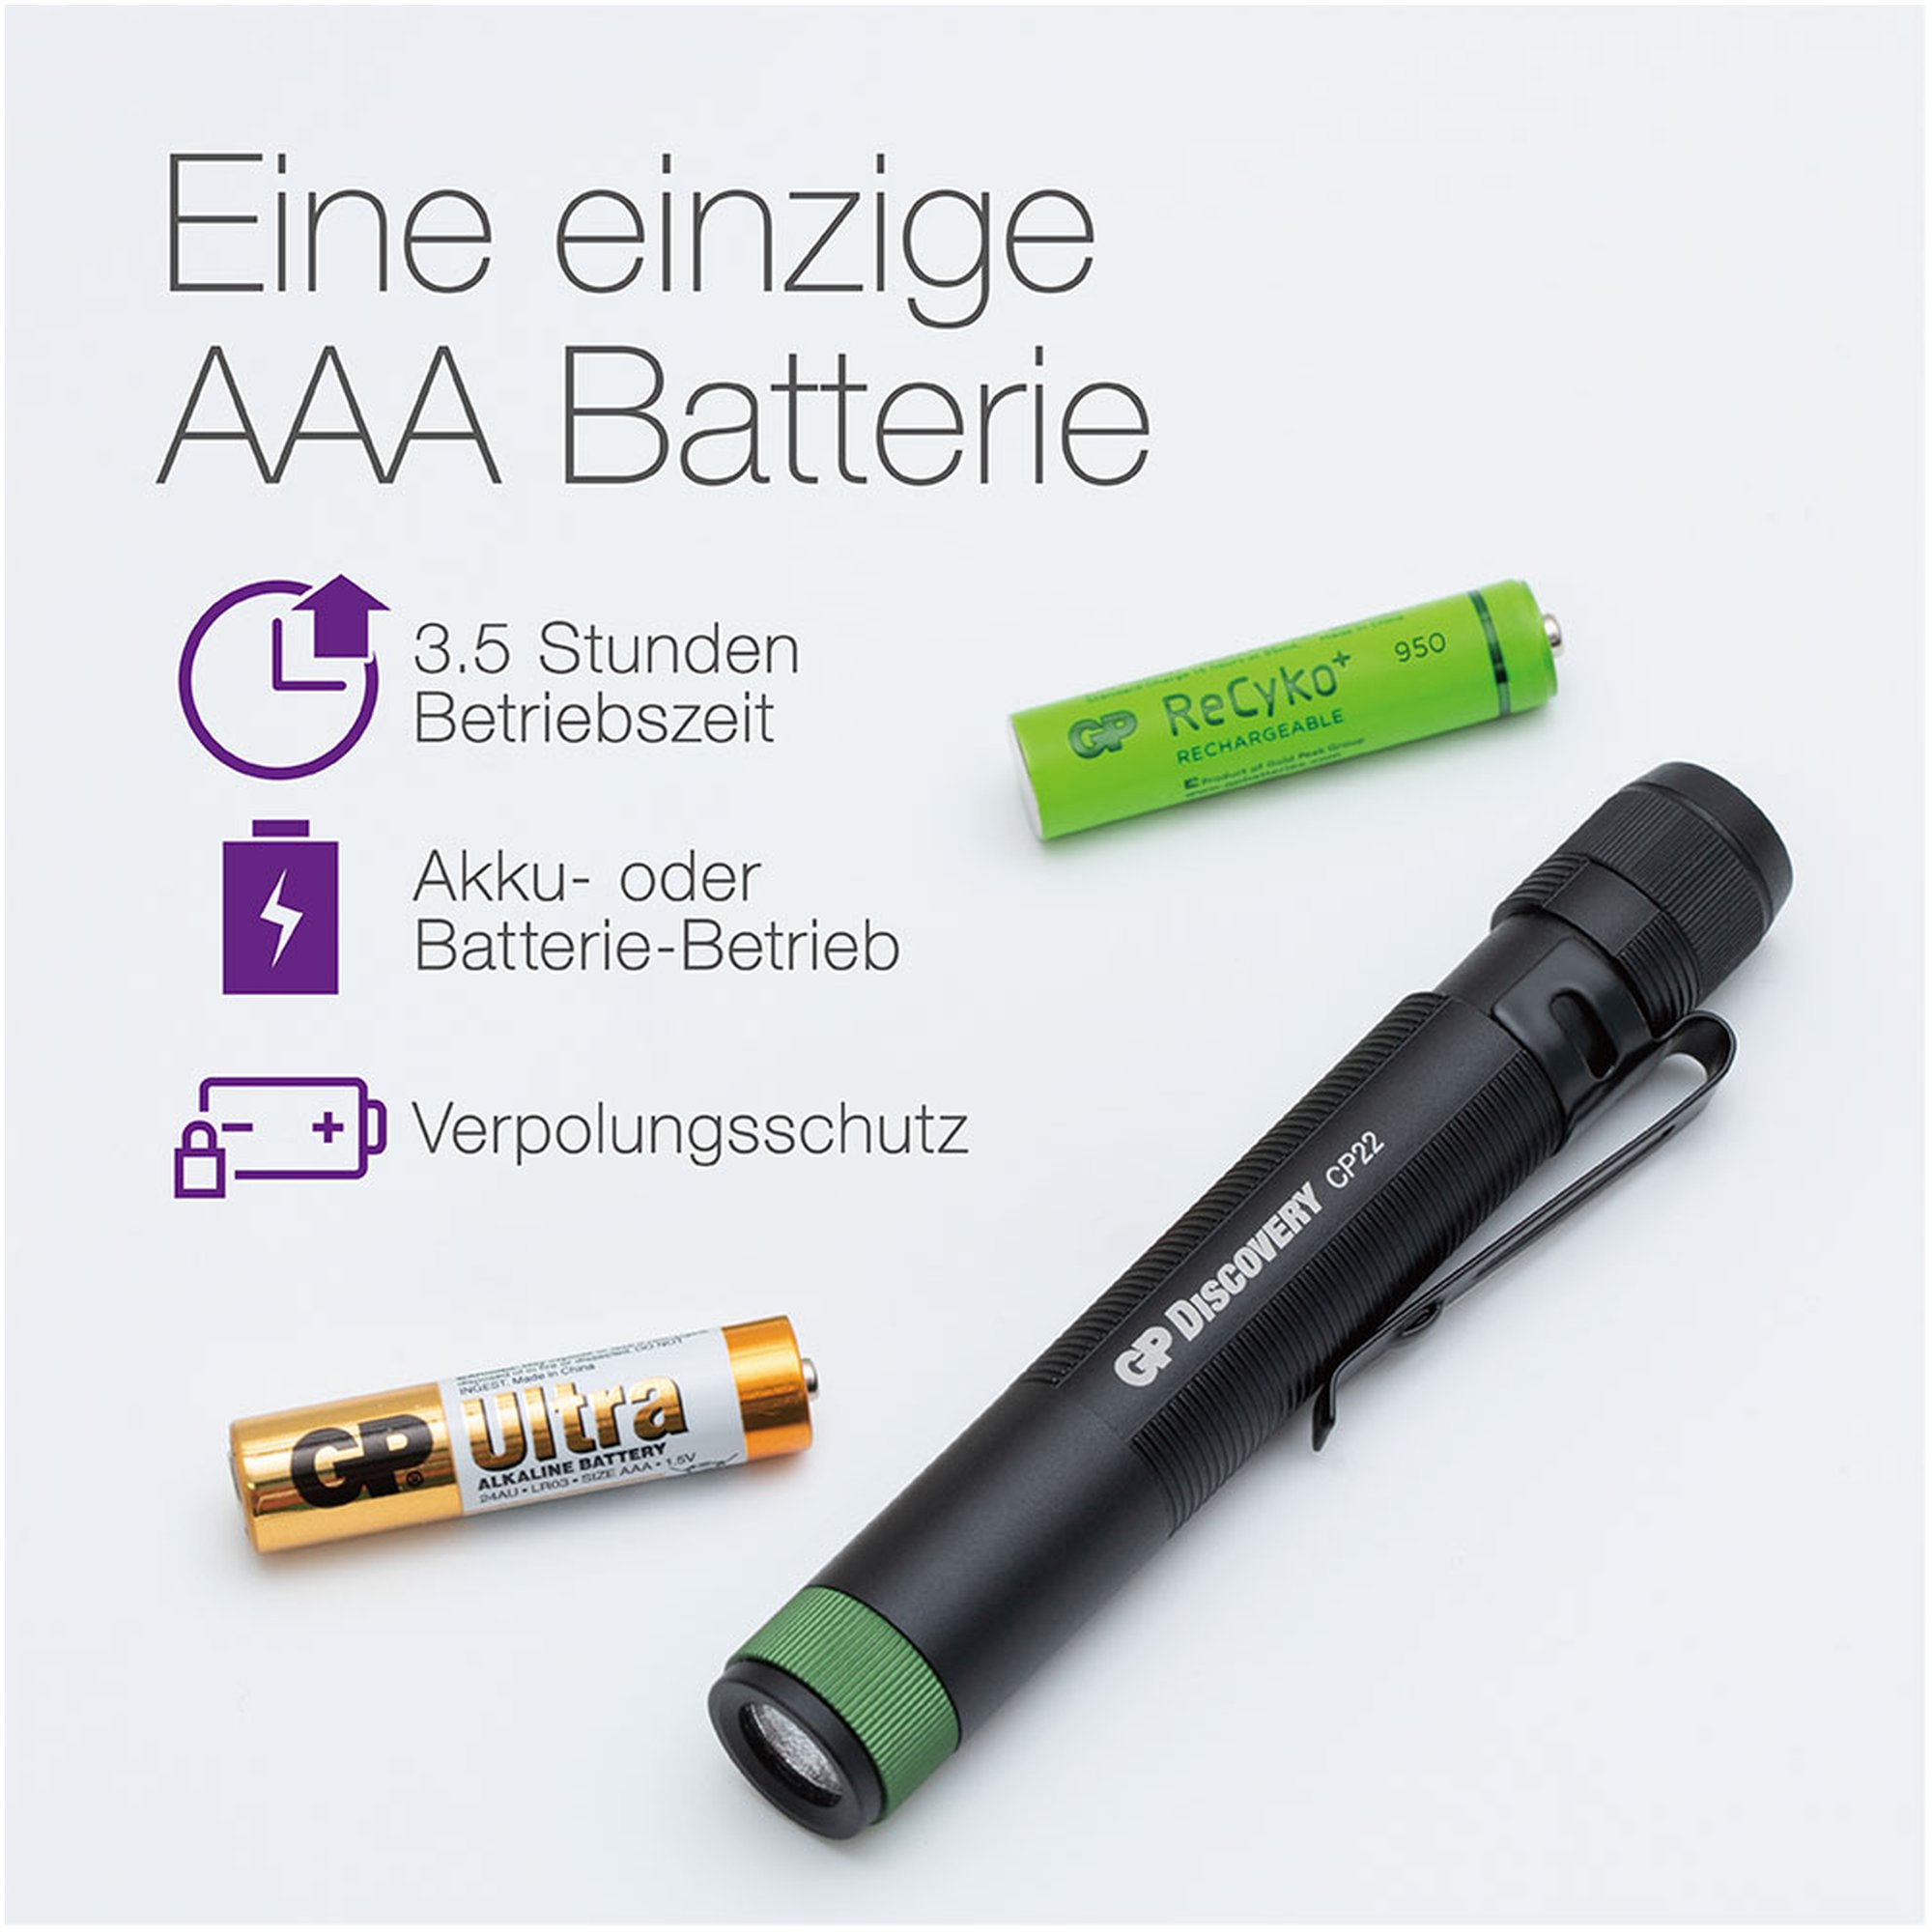 Taschenlampe CP22 365nm inkl. 1x AAA 1,5V Batterie